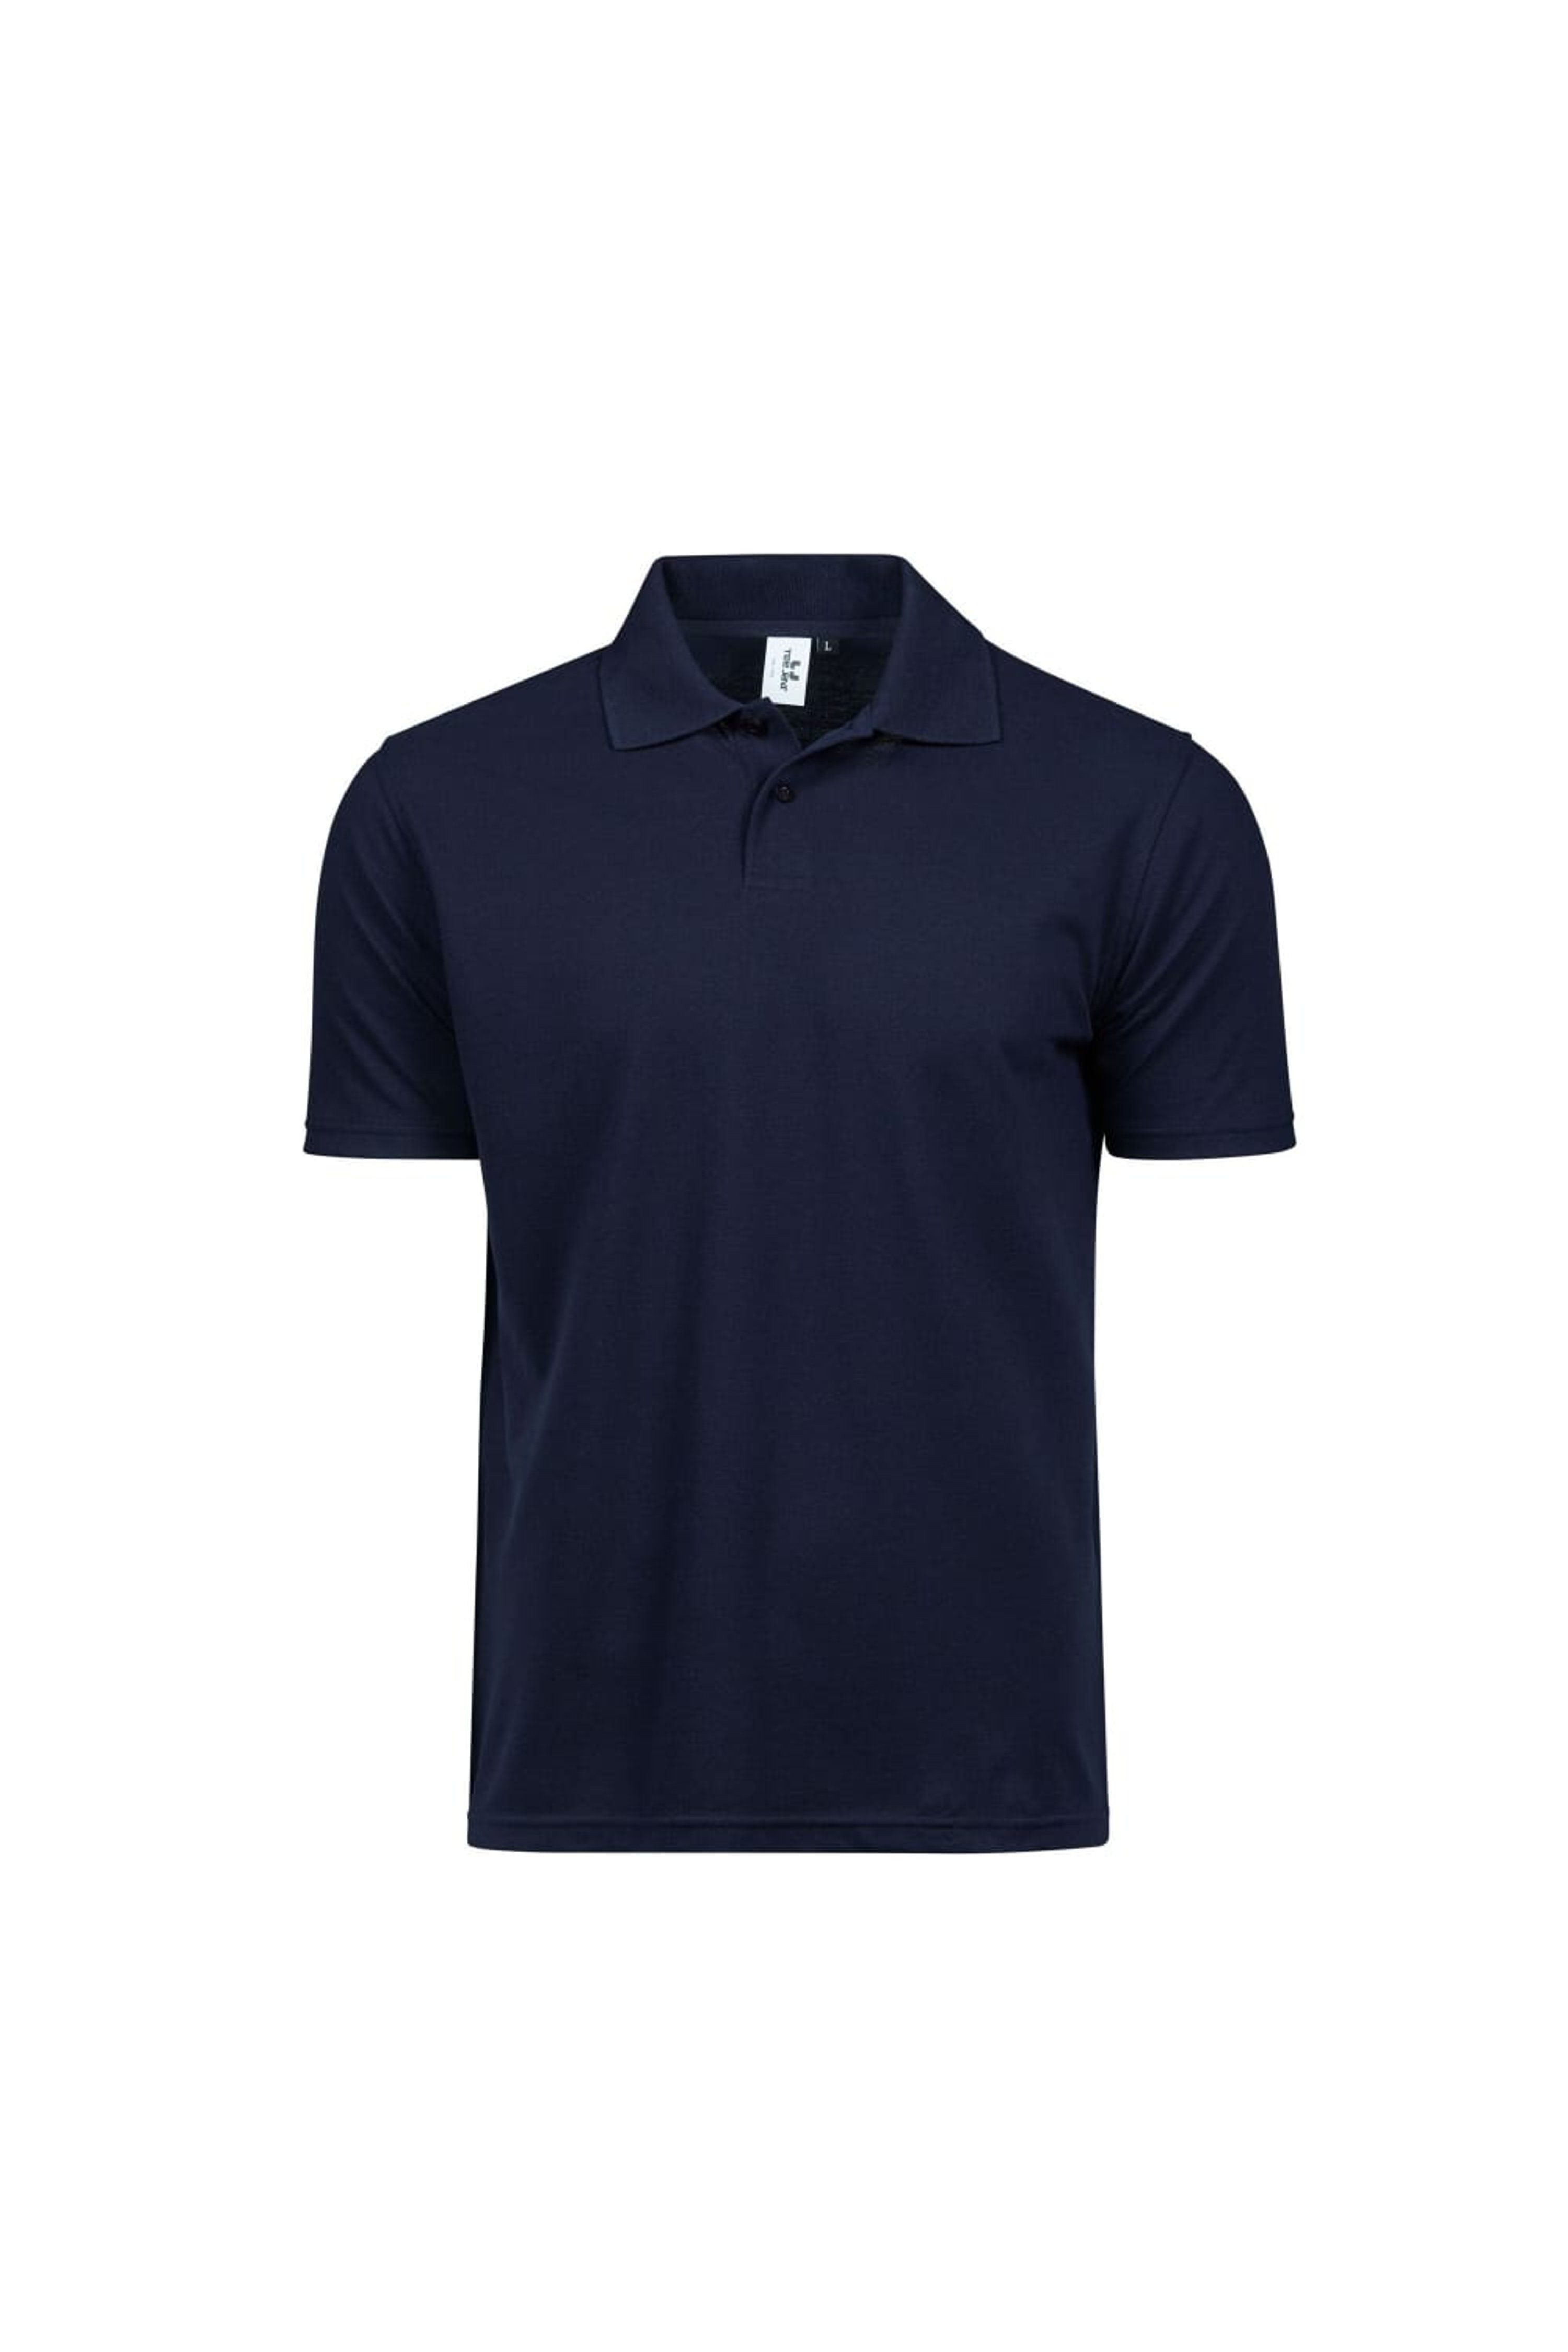 Tee Jays Mens Power Polo Shirt (Navy Blue) - L - Also in: XXL, 5XL, XS, XL, M, 4XL, S, 3XL | Verishop